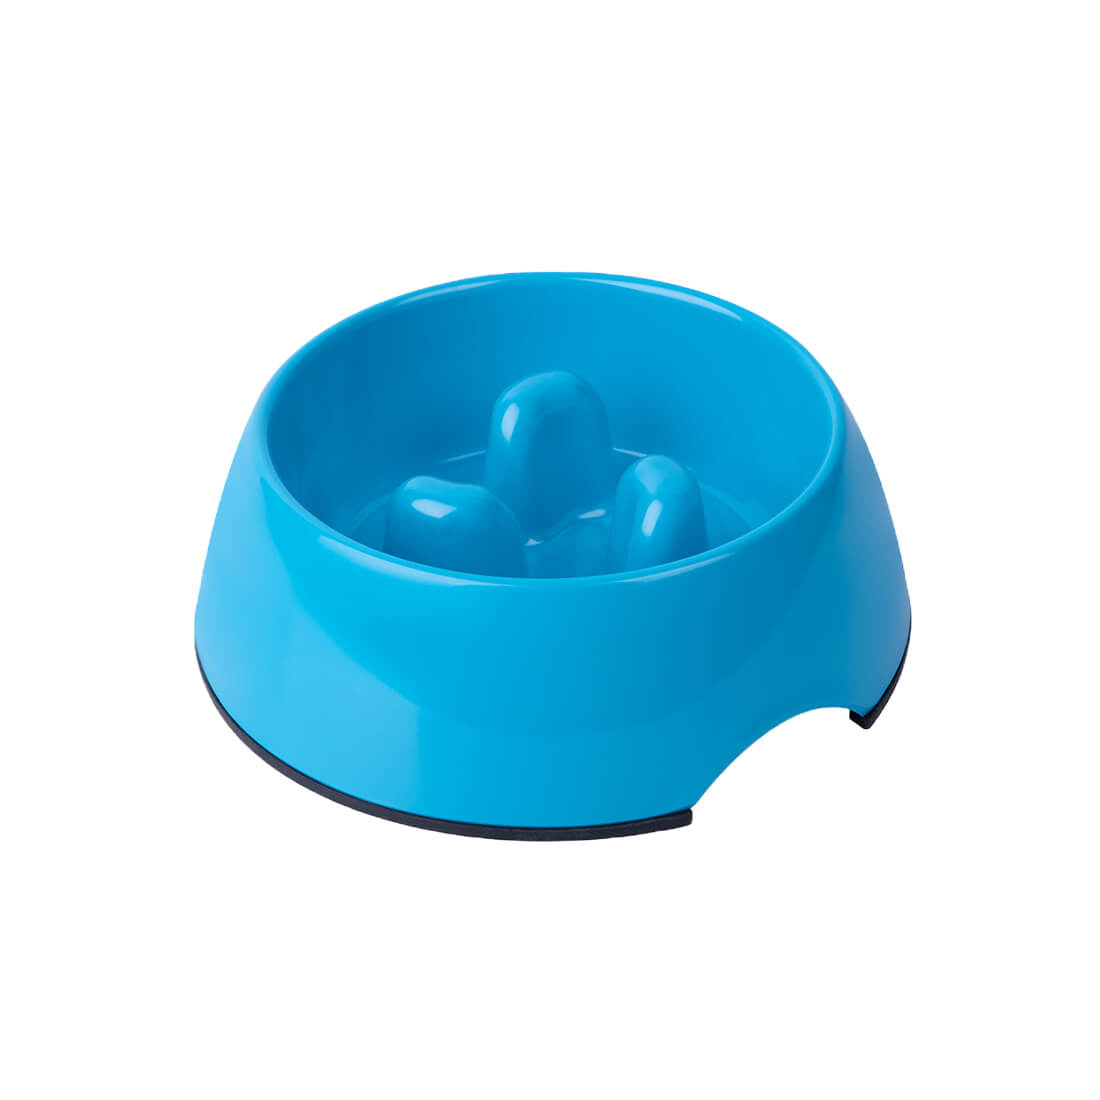 Slow Feeder Dog Bowl - Puzzle Bowl for Dog - Anti-Gulping